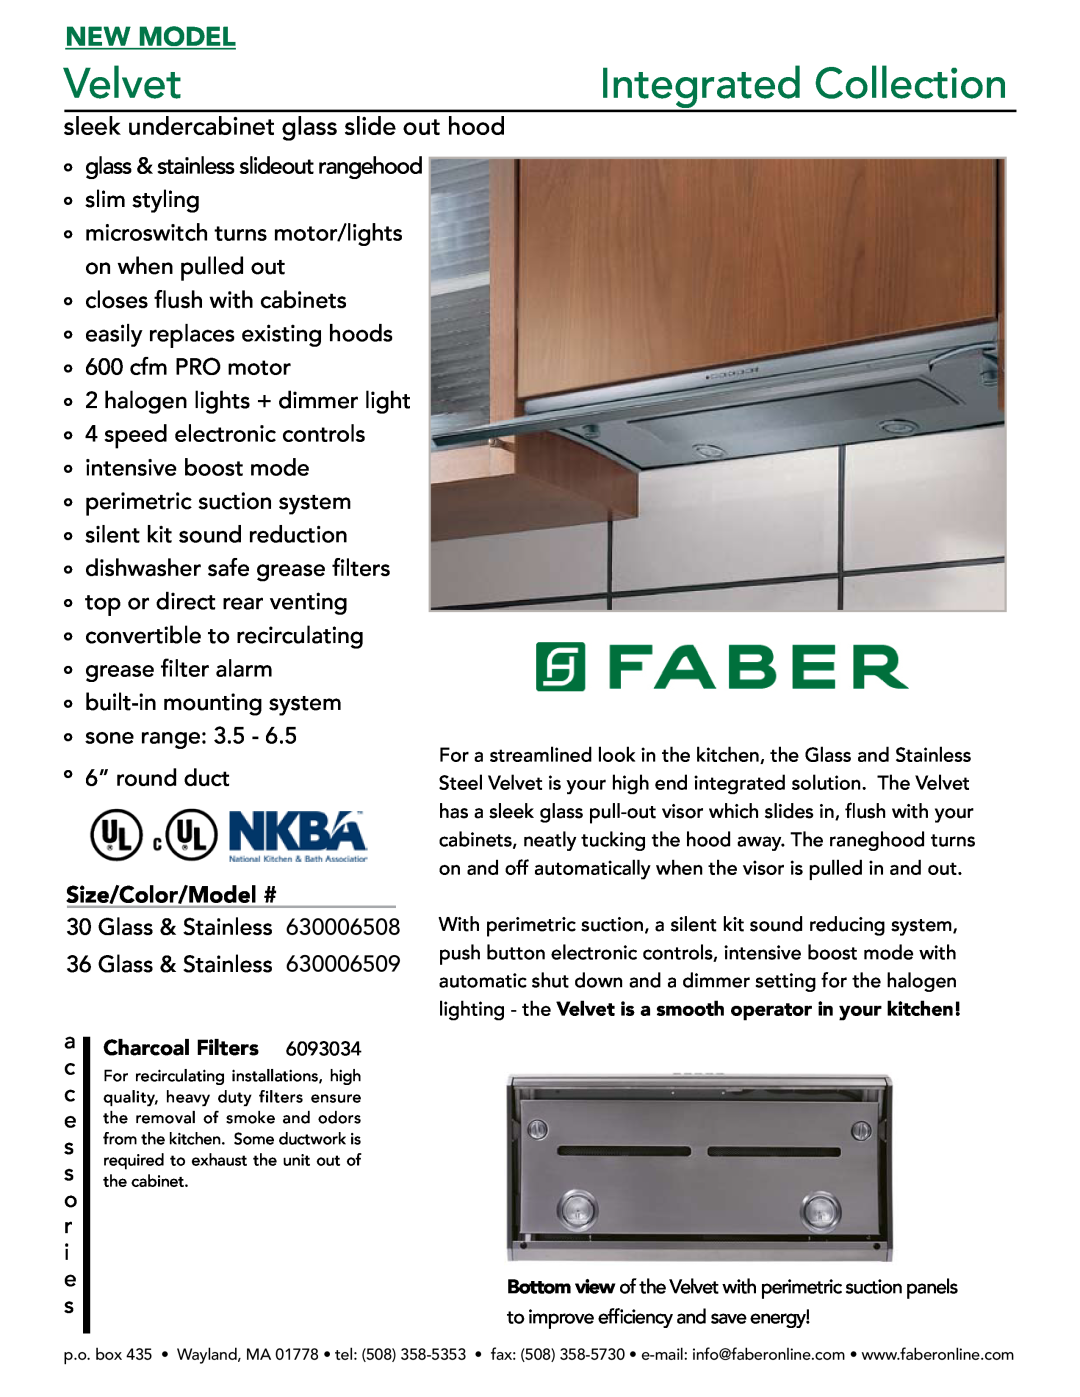 Faber 630006508 manual Size/Color/Model #, Velvet, Integrated Collection, New Model 